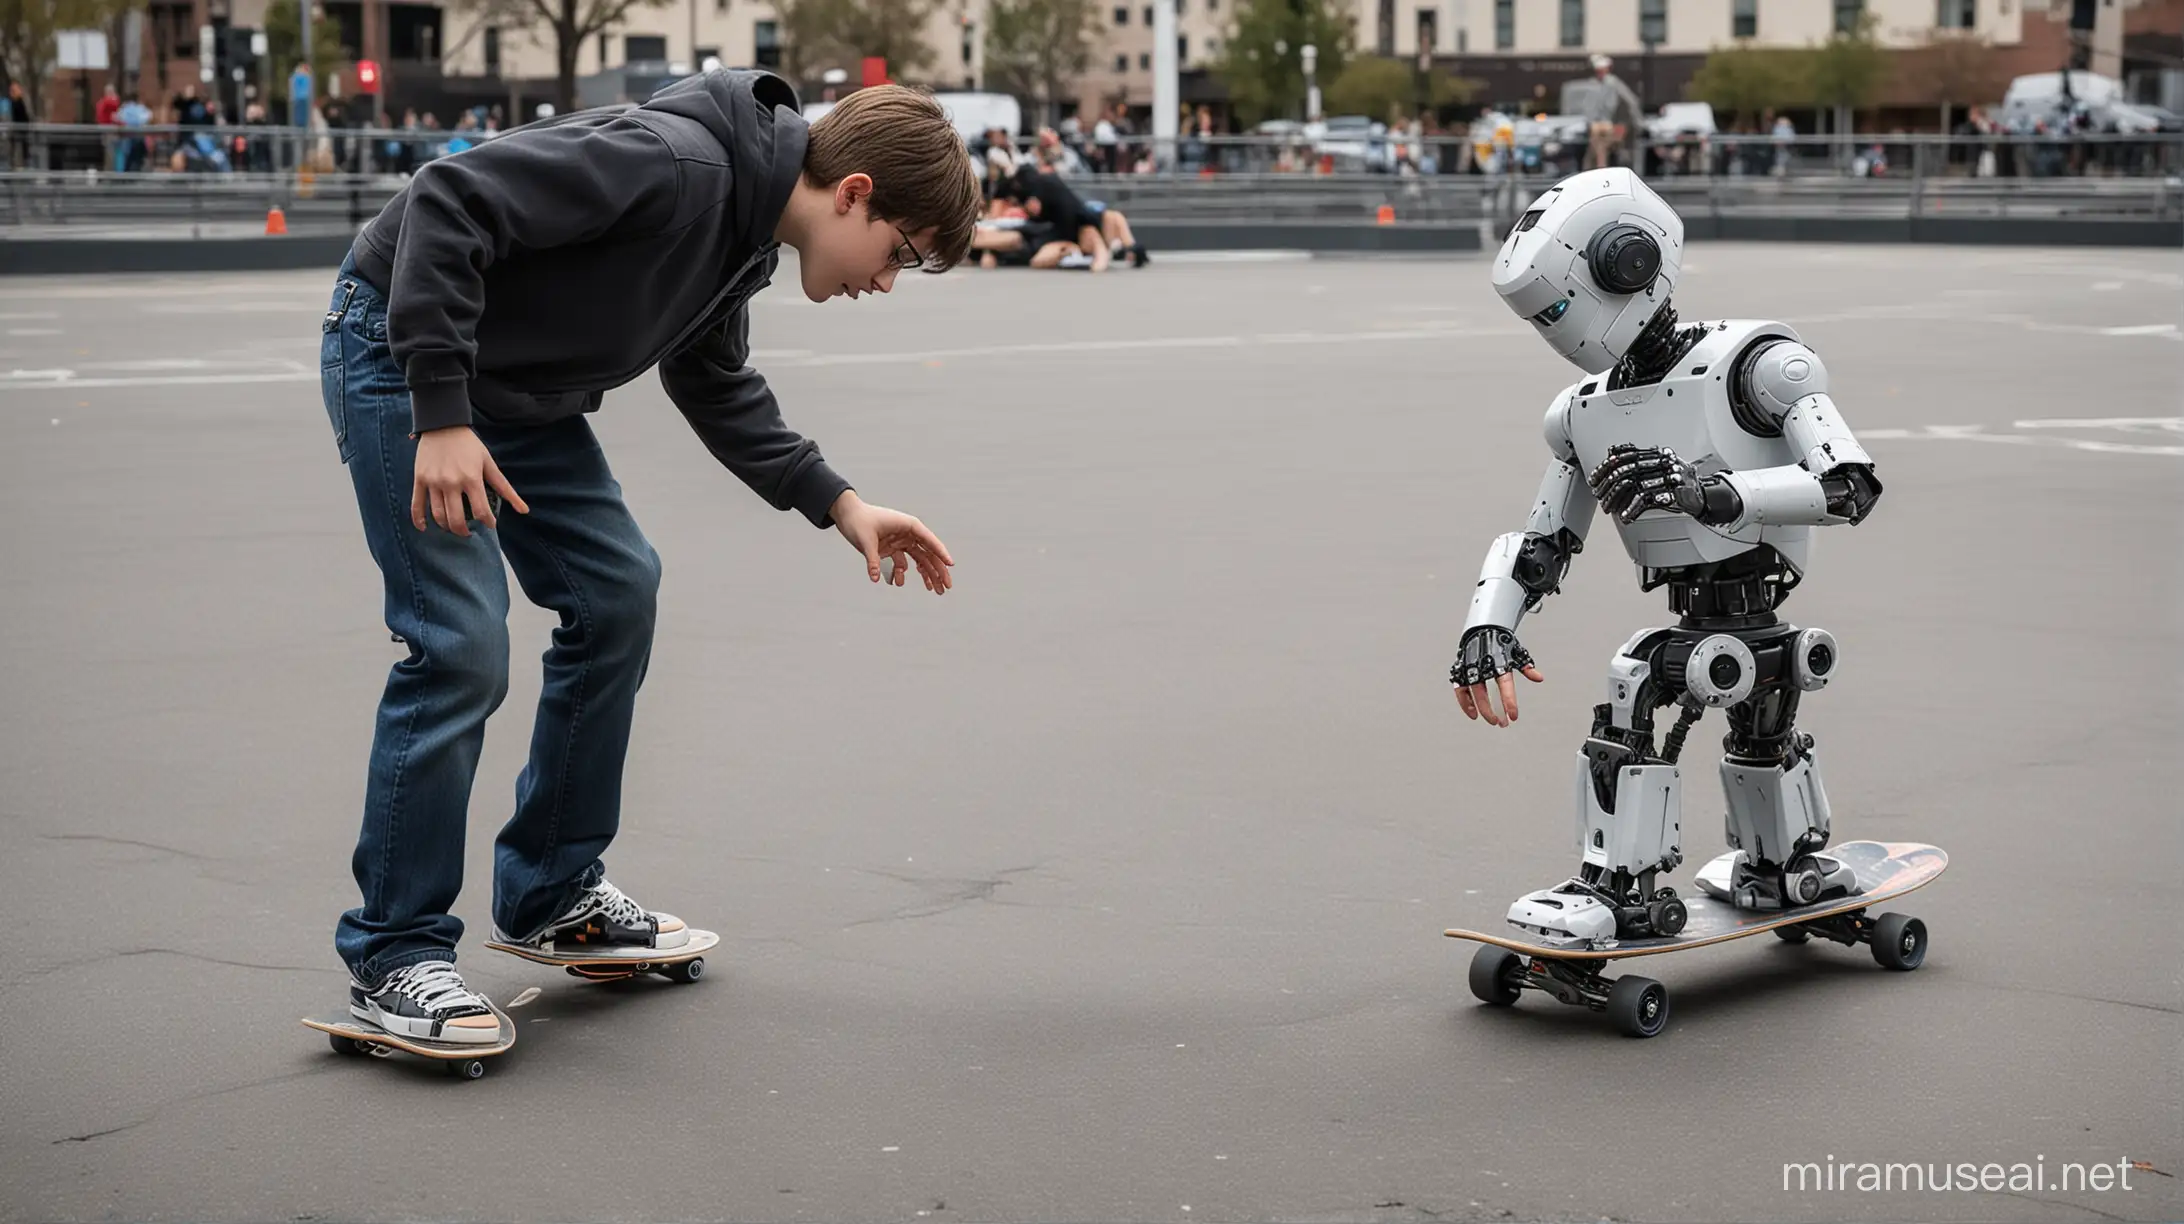 A kid Teaching a robot how to skateboard